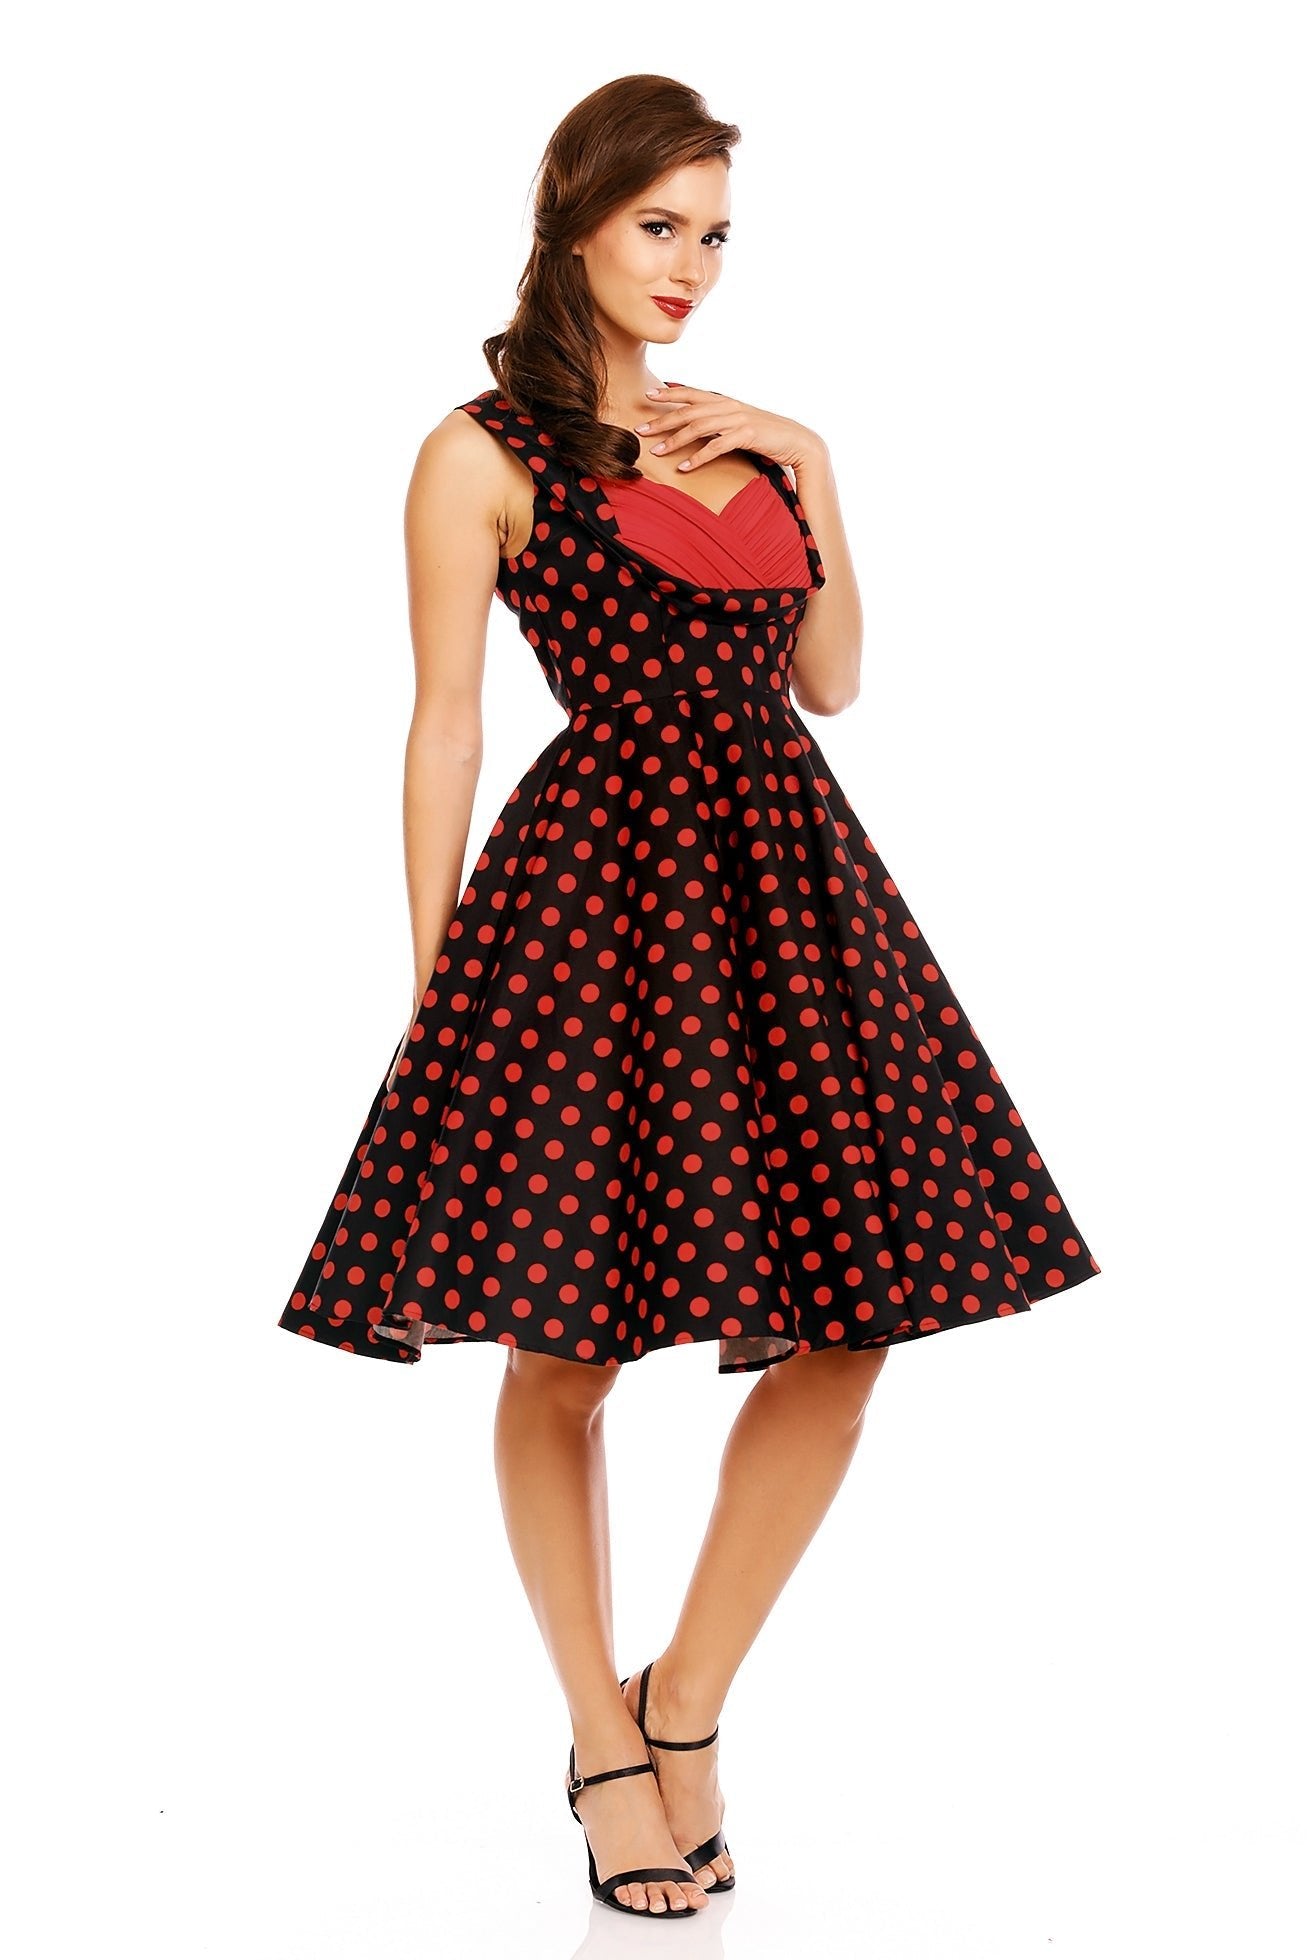 Grace Vintage Glamorous Swing Dress in Black-Red Polka Dots